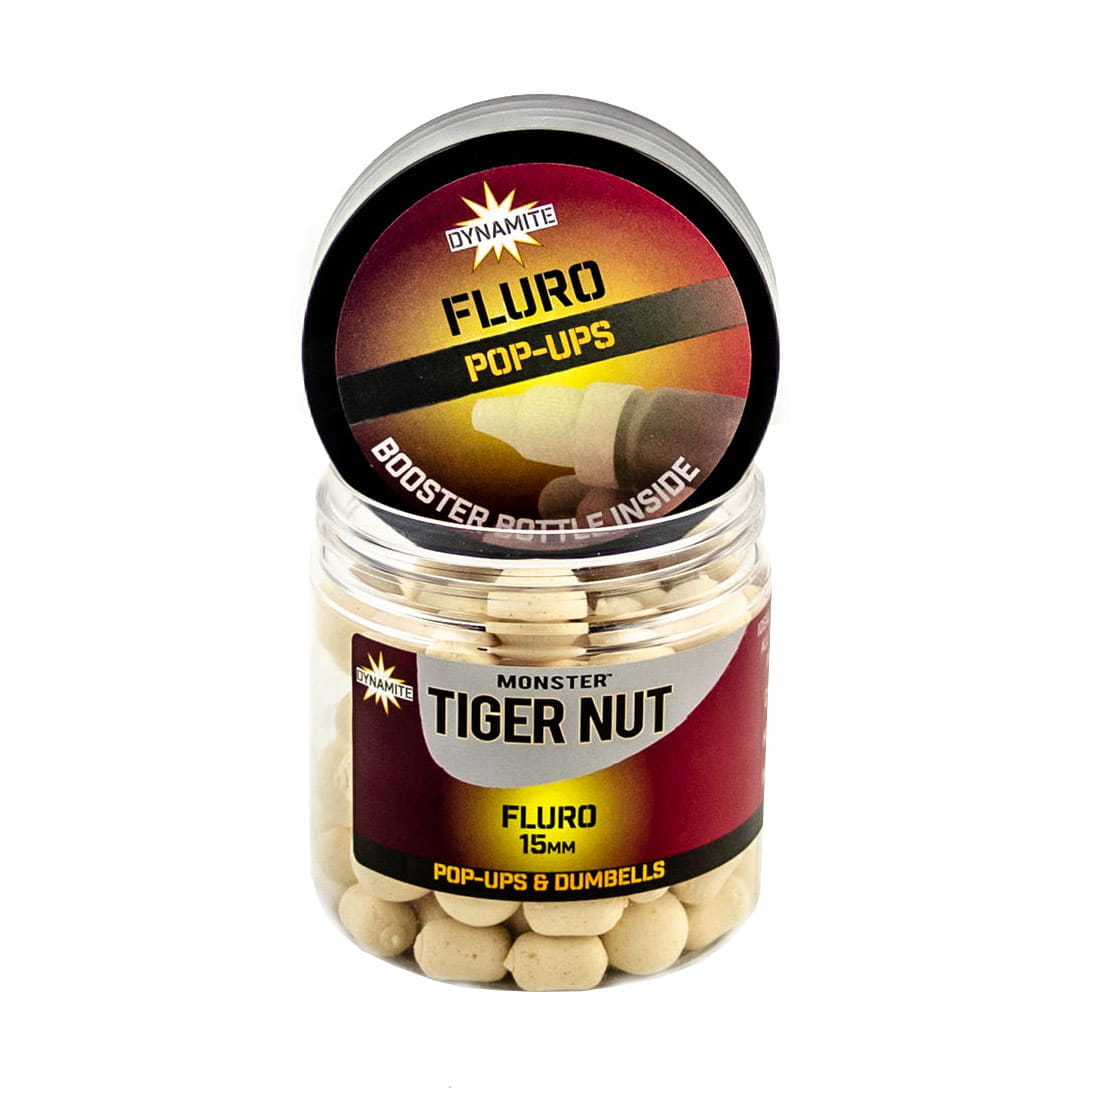 Monster Tiger Nut Fluro Pop Ups & Dumbells